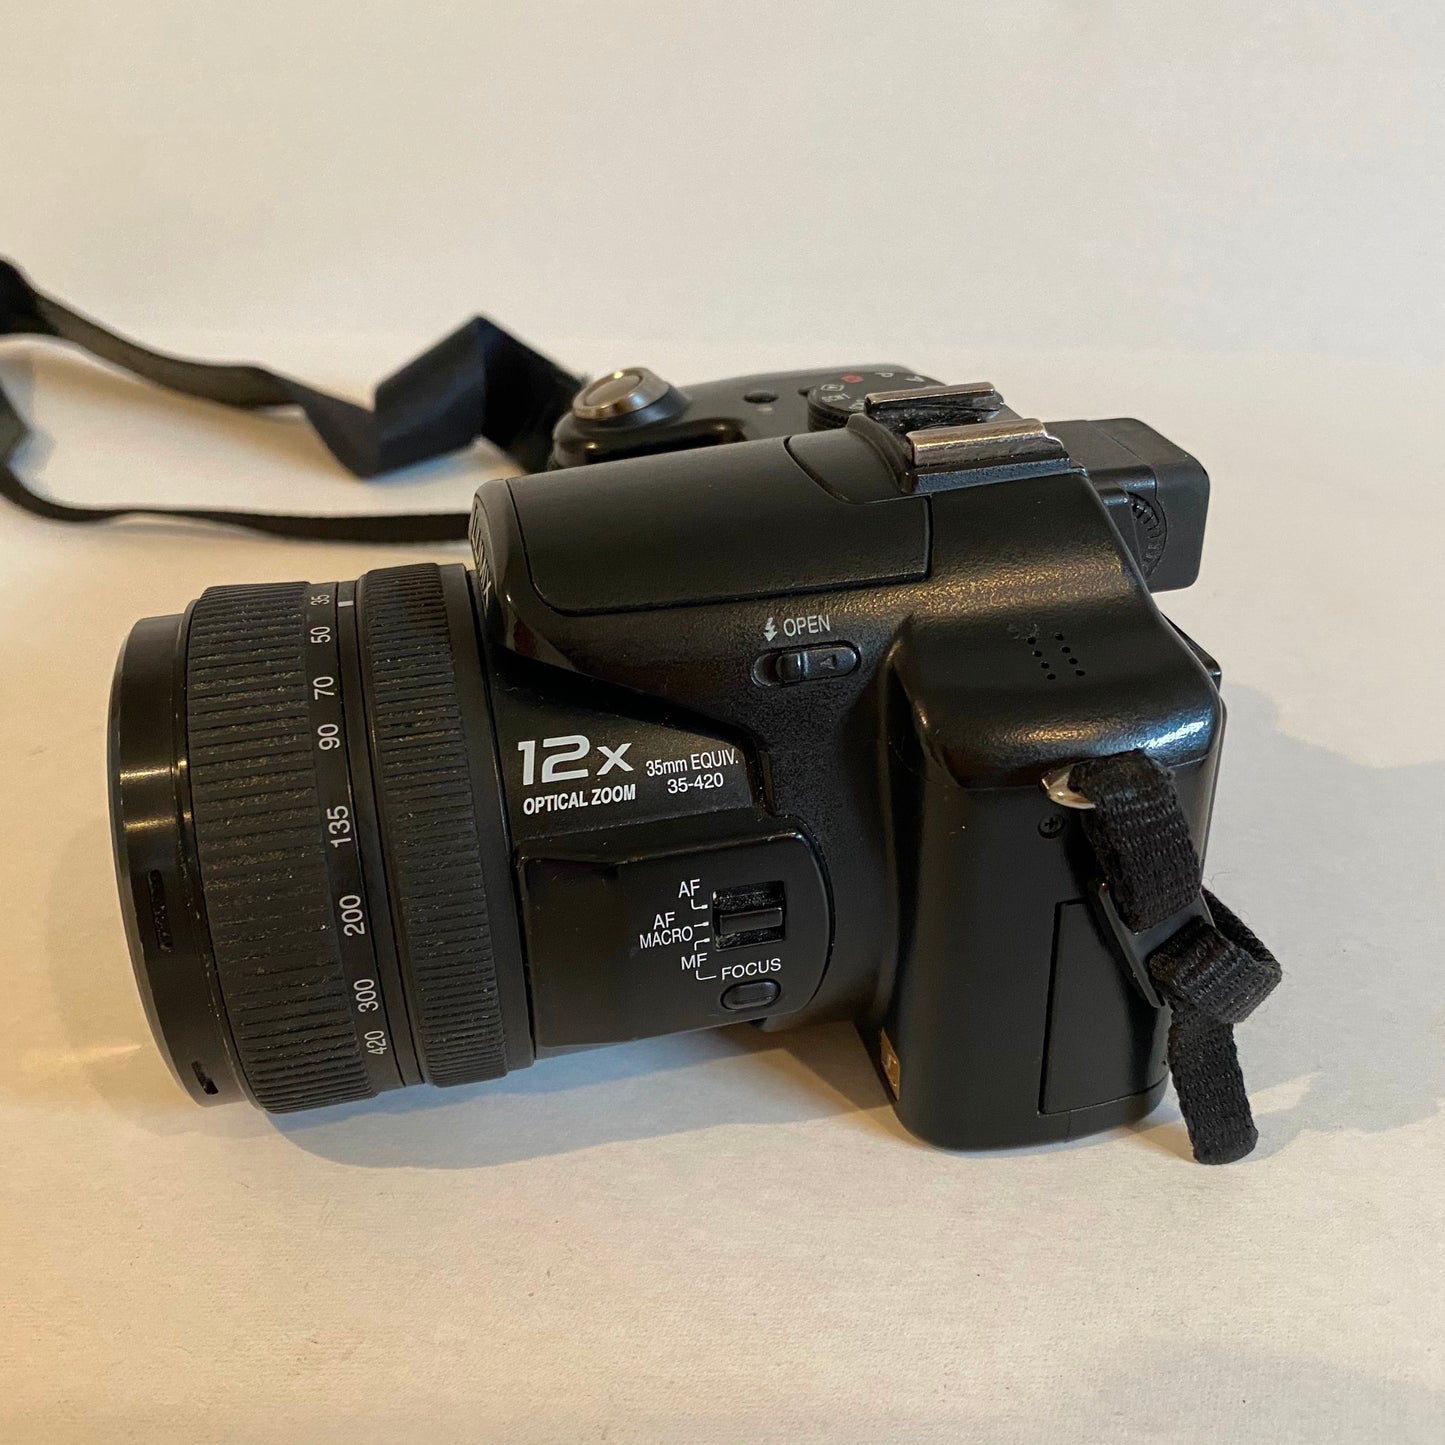 Panasonic Lumix Digital Camera - DMC-FZ30 with two batteries